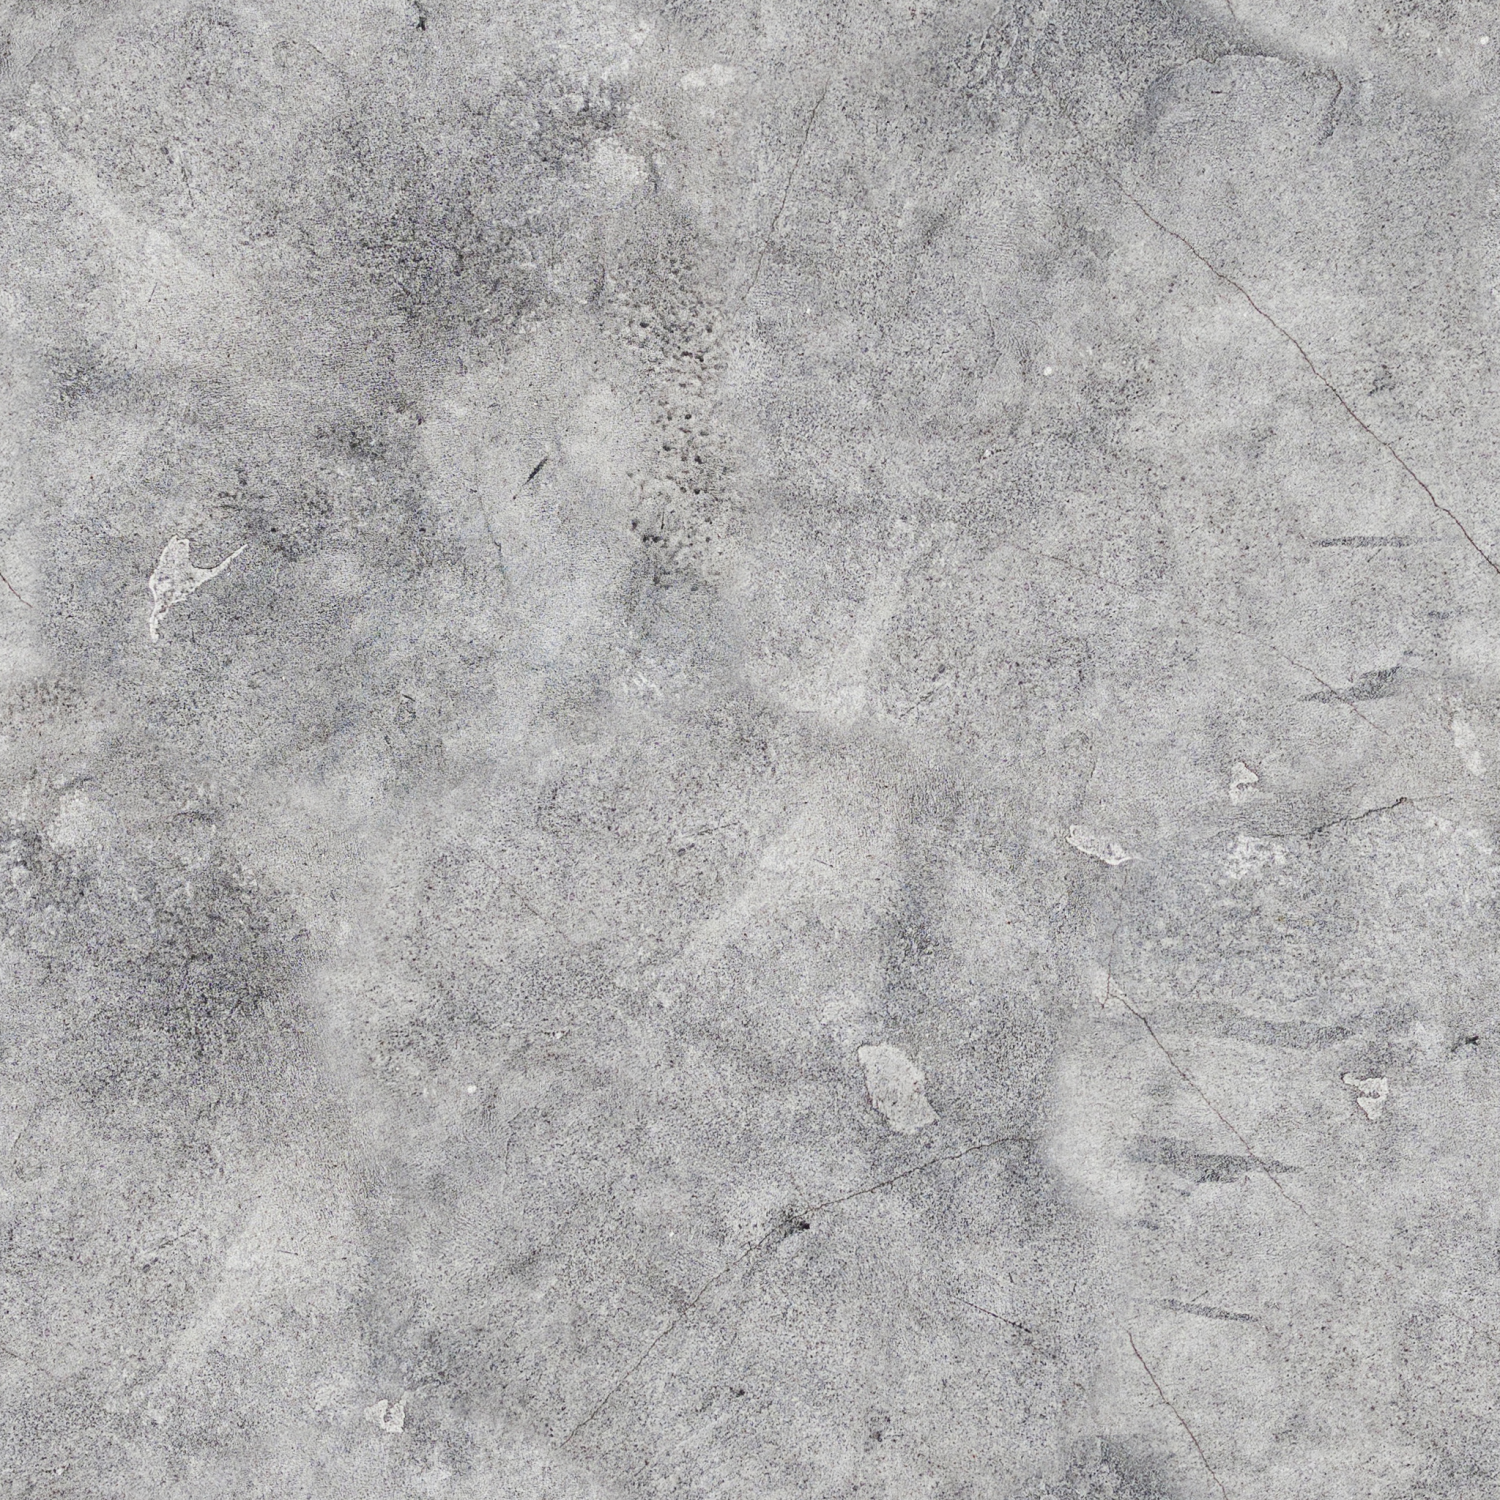 concrete texture CG Textures in